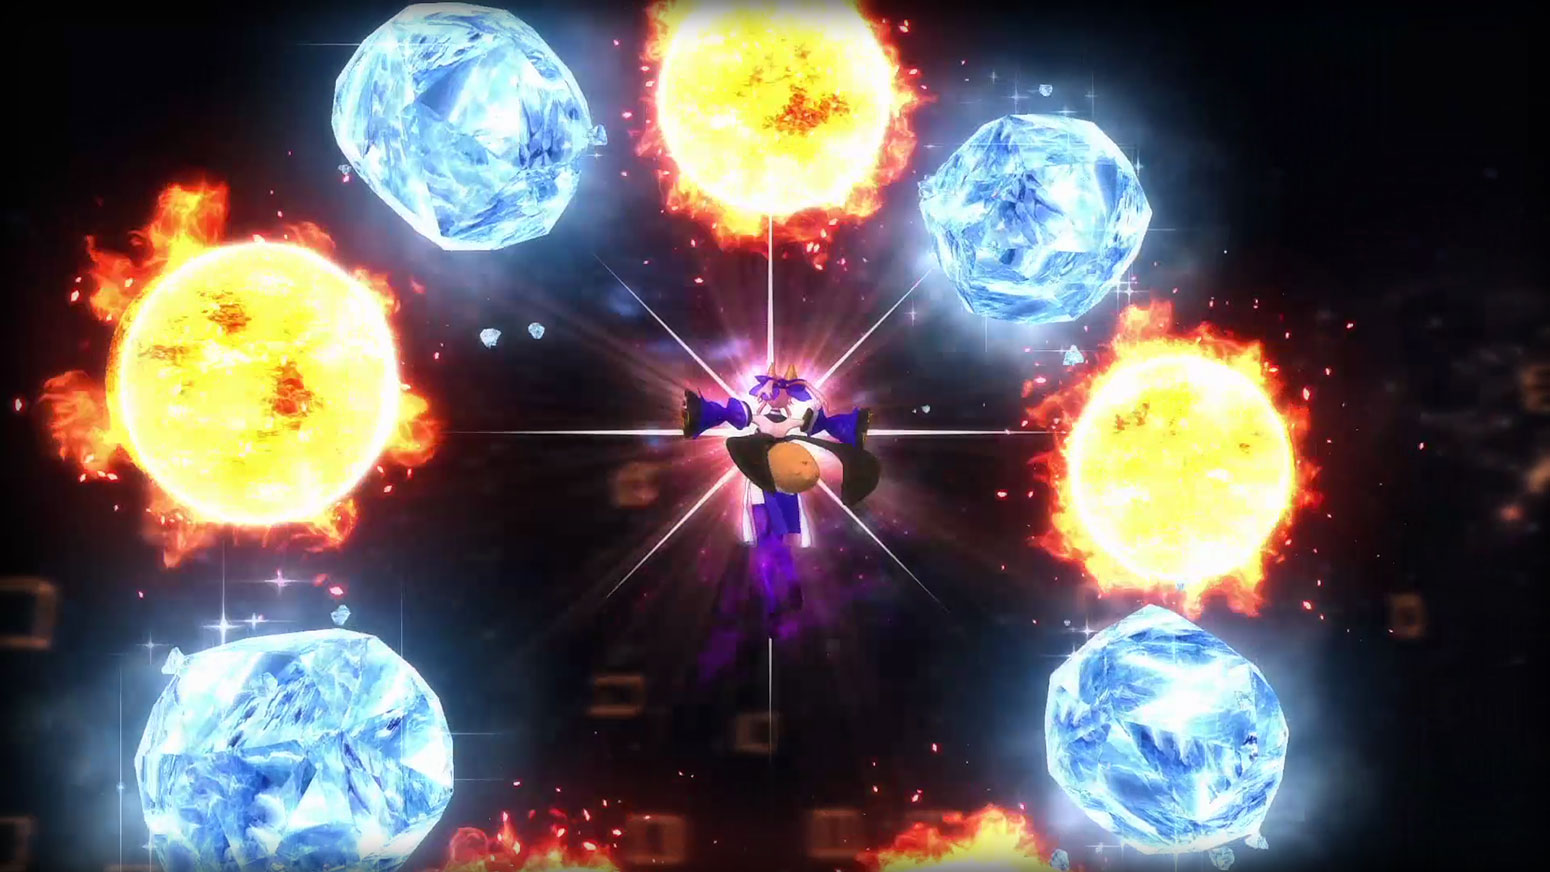 Fate/EXTELLA: The Umbral Star - Noble Phantasm Screenshot 2